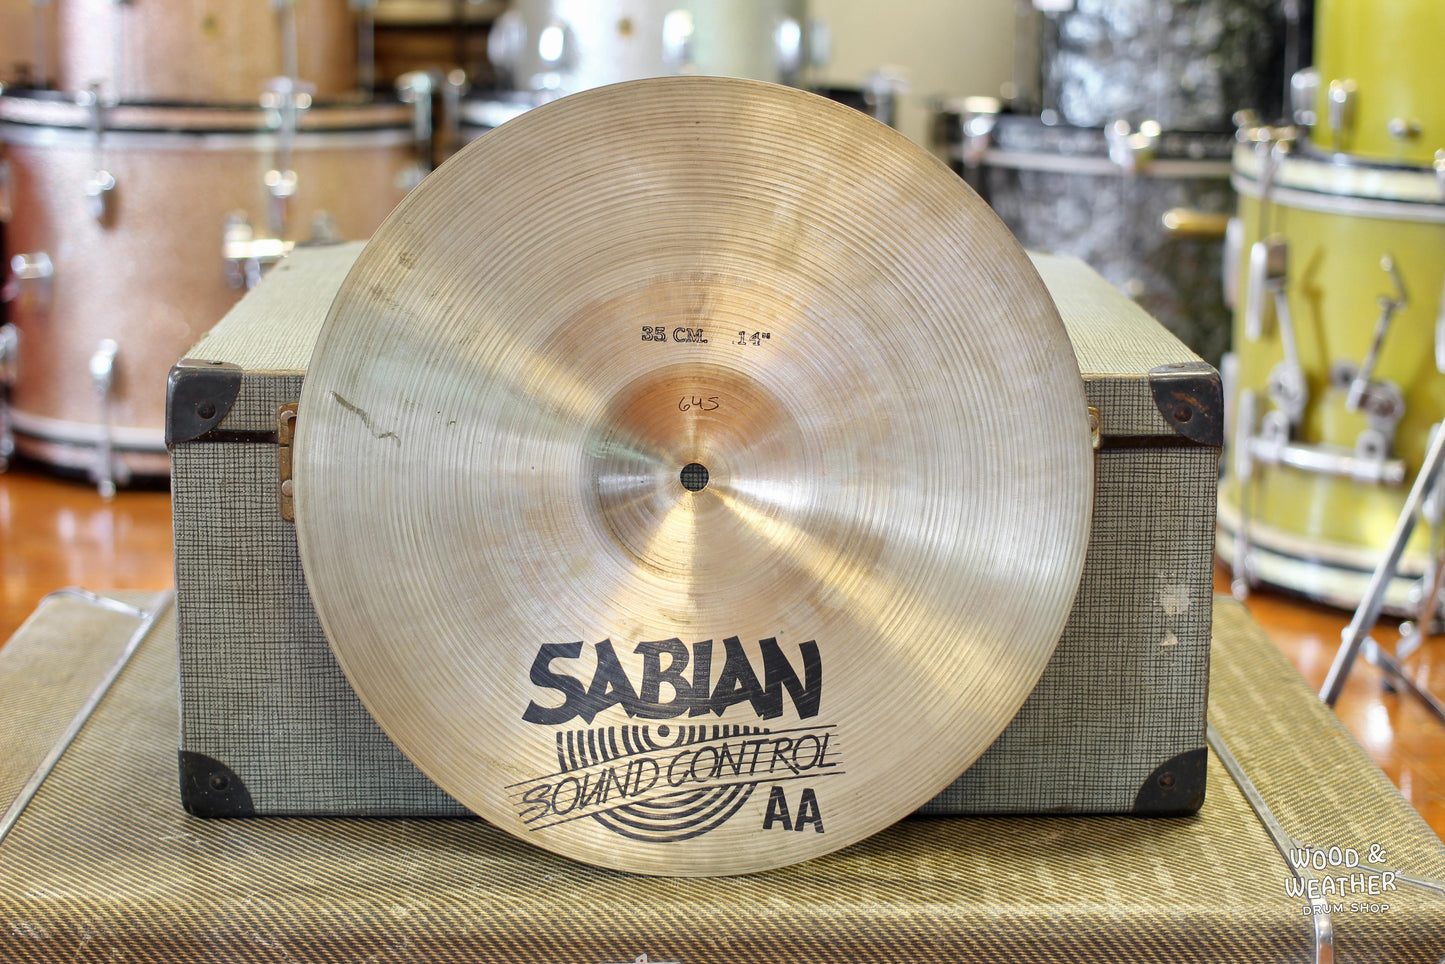 1980s Sabian 14" AA Sound Control Crash Cymbal 645g